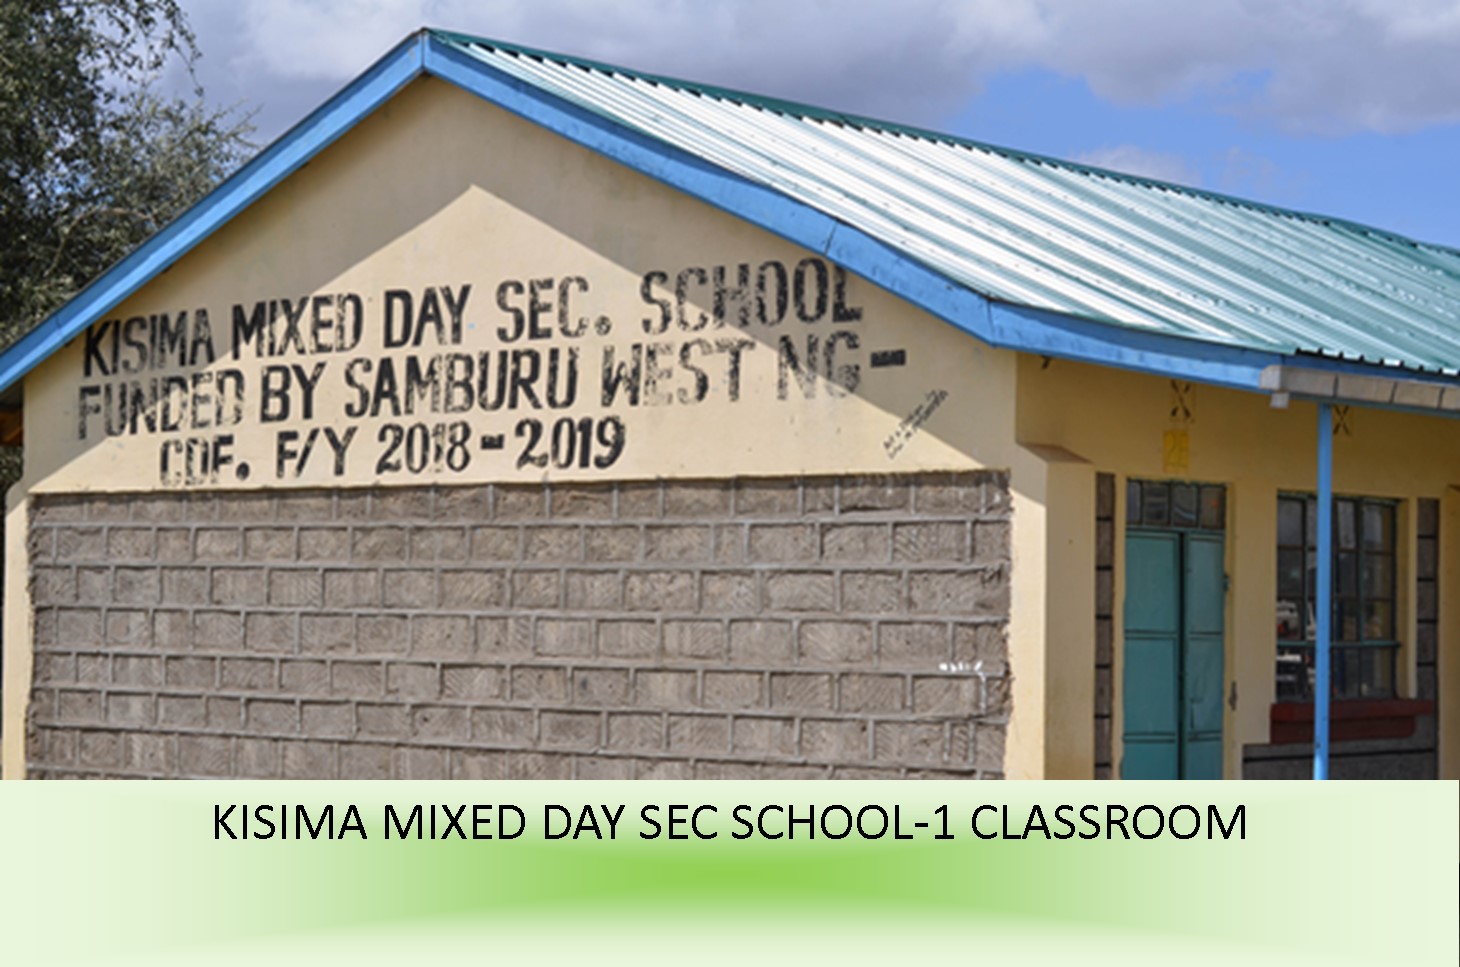 https://samburu-west.ngcdf.go.ke/wp-content/uploads/2021/08/kisima-mixed-day-sec-school-1-classroom.jpg